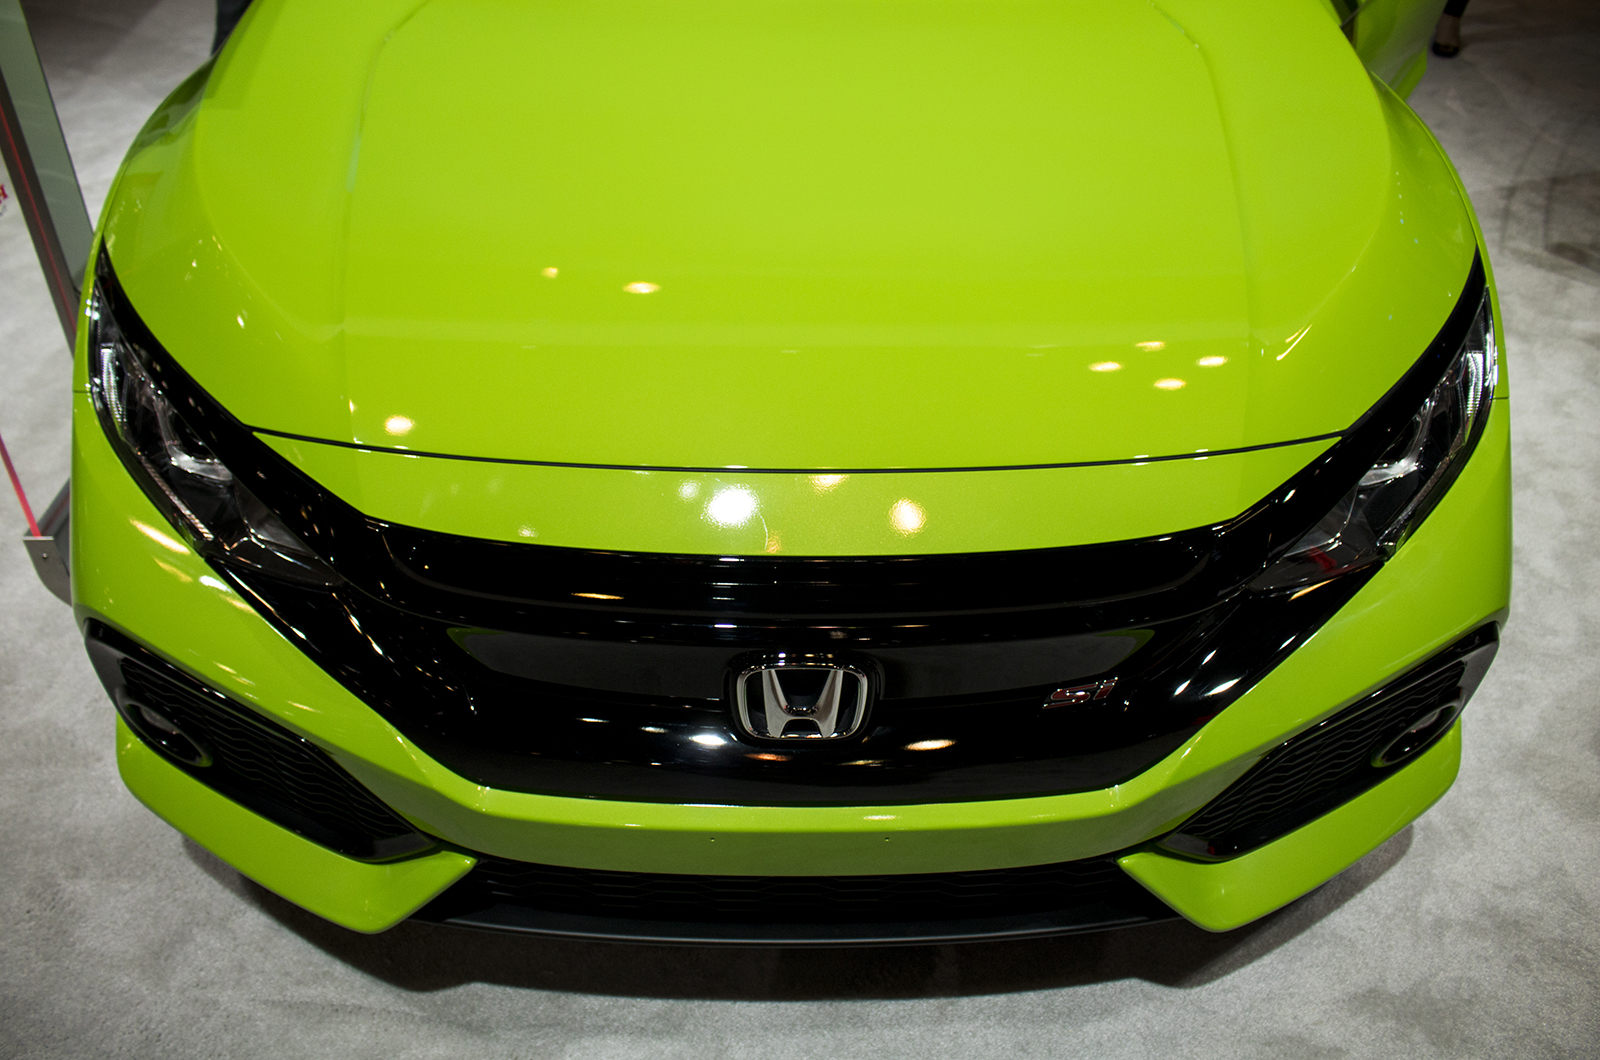 Honda Civic Si in Energy Green, <i>Kyle Cheromcha</i>